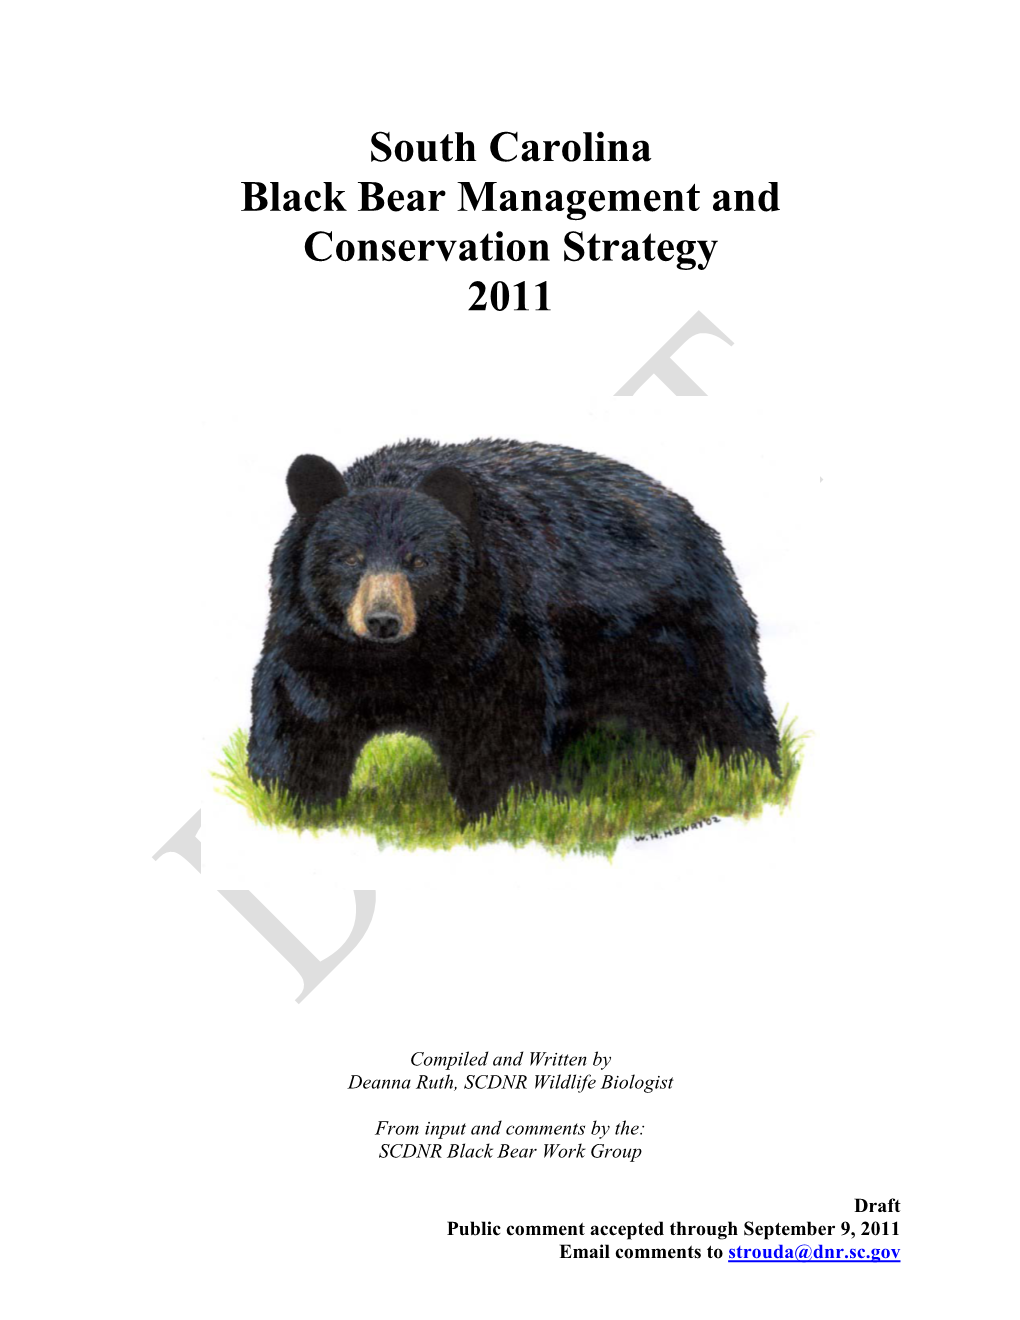 South Carolina Black Bear Management and Conservation Strategy 2011